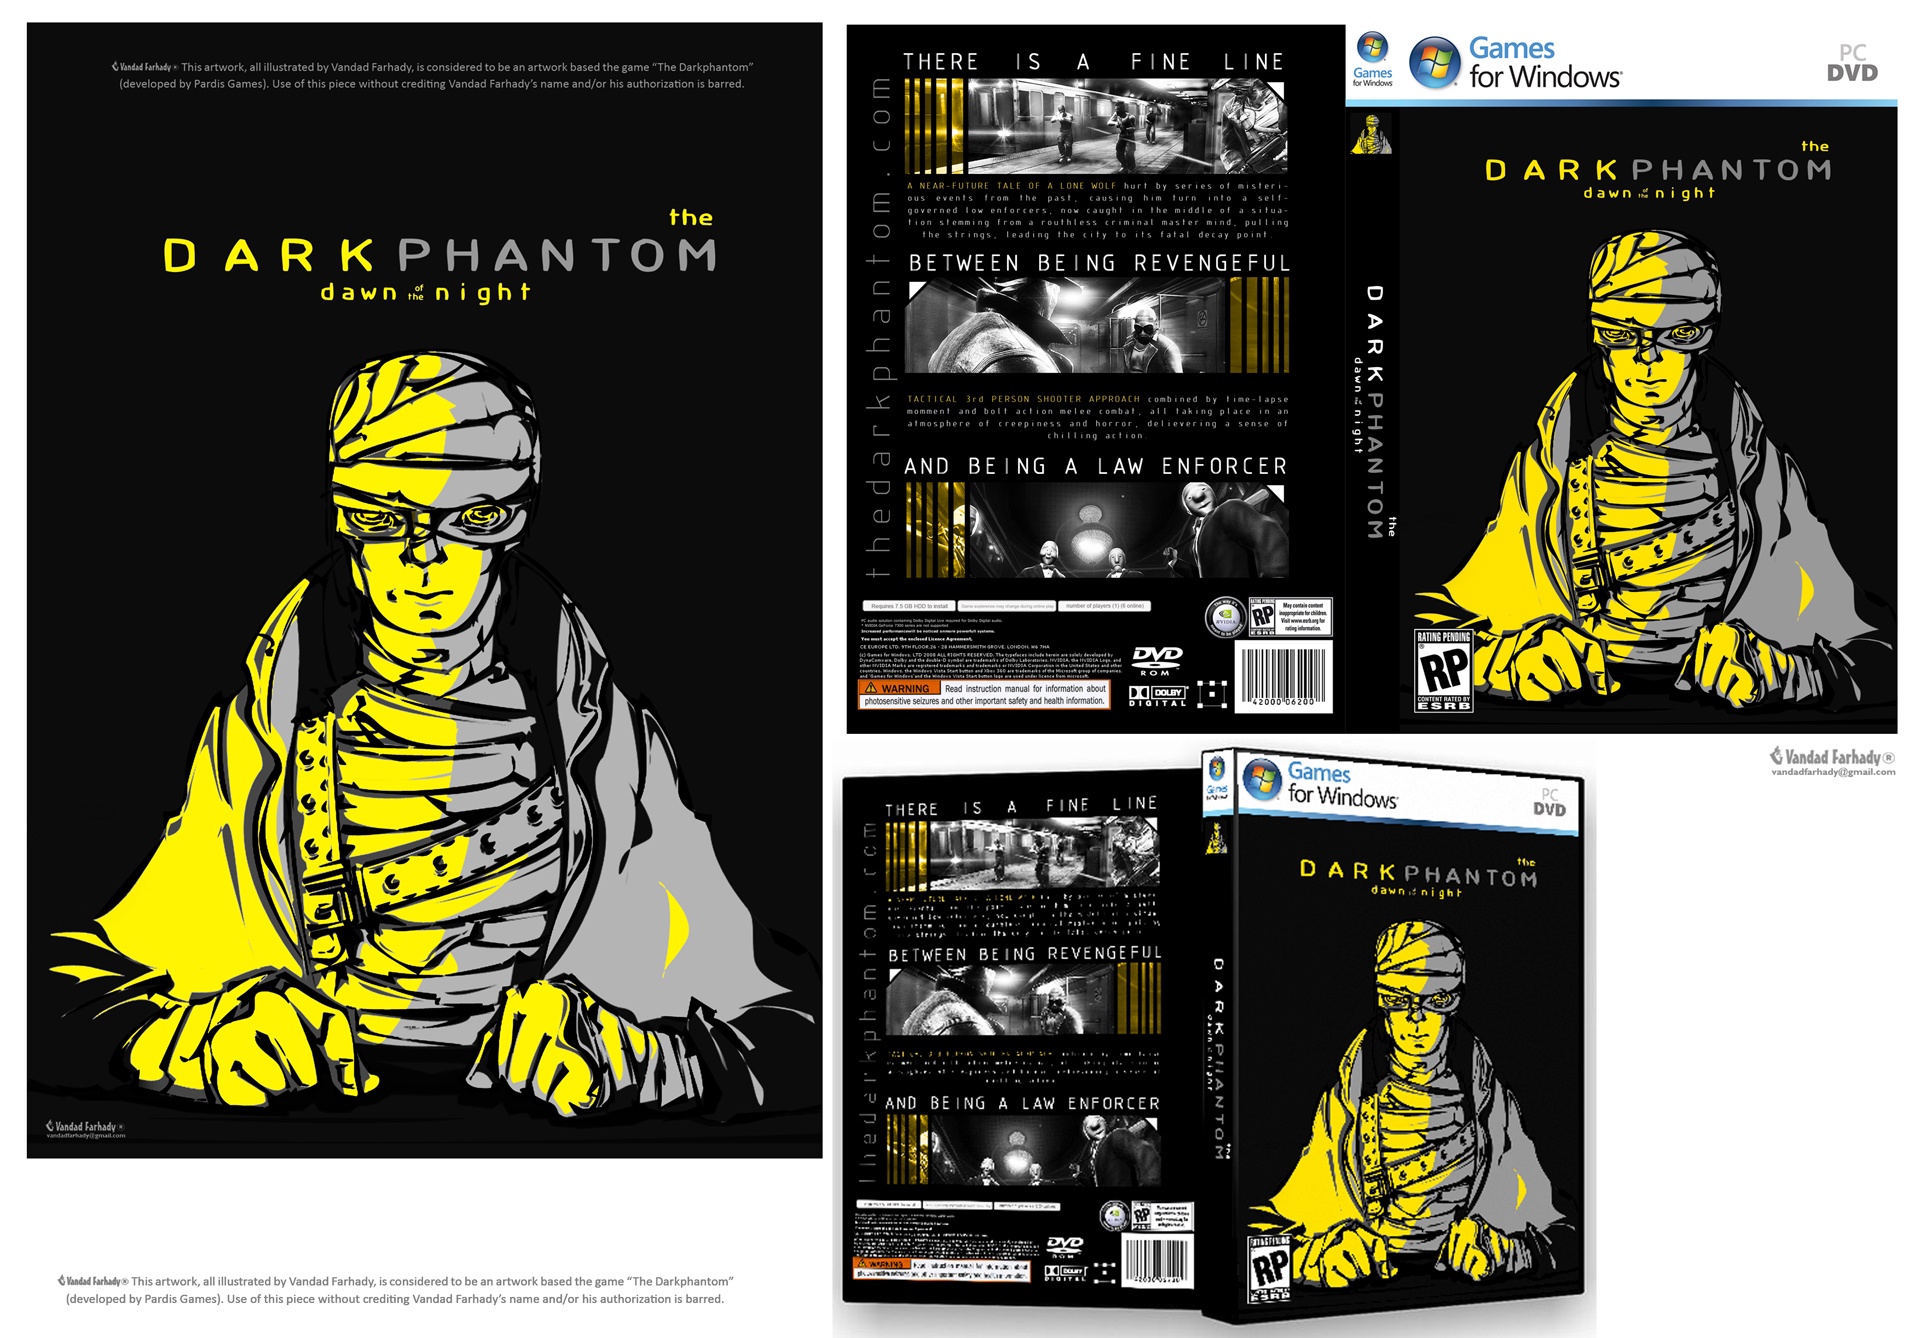 The Dark Phantom box cover